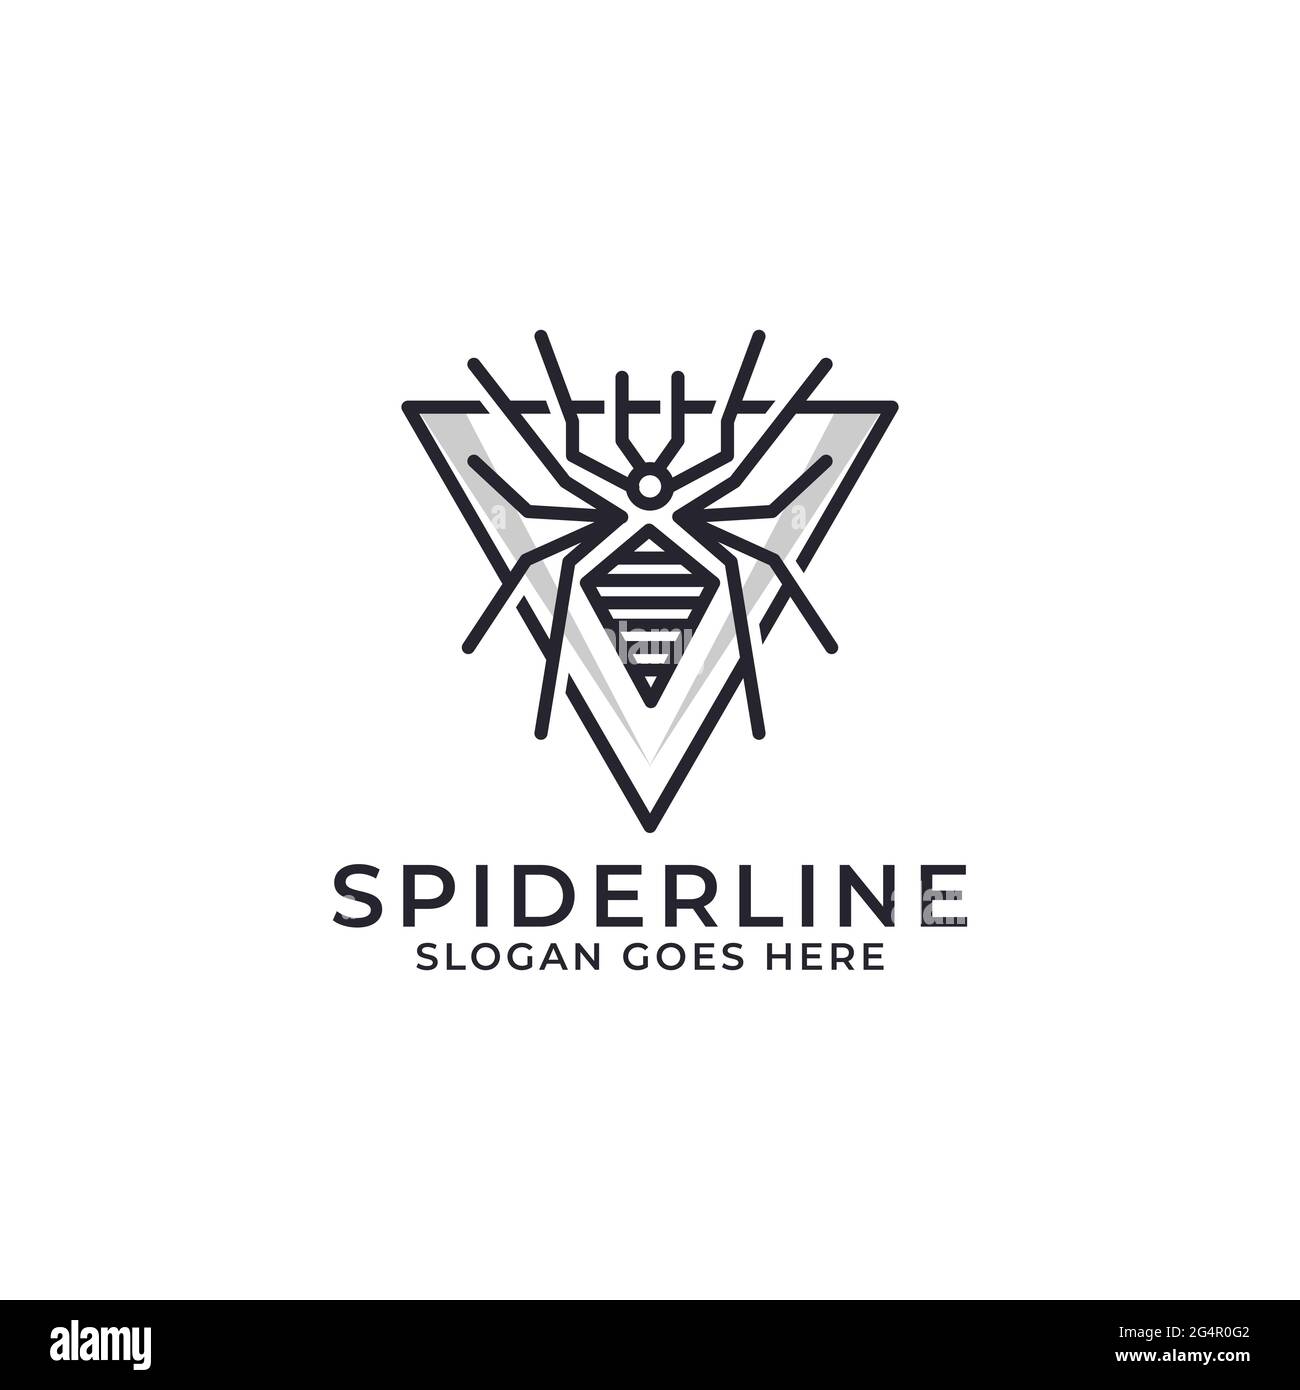 spider line art logo design vector, best for pet or animal logo